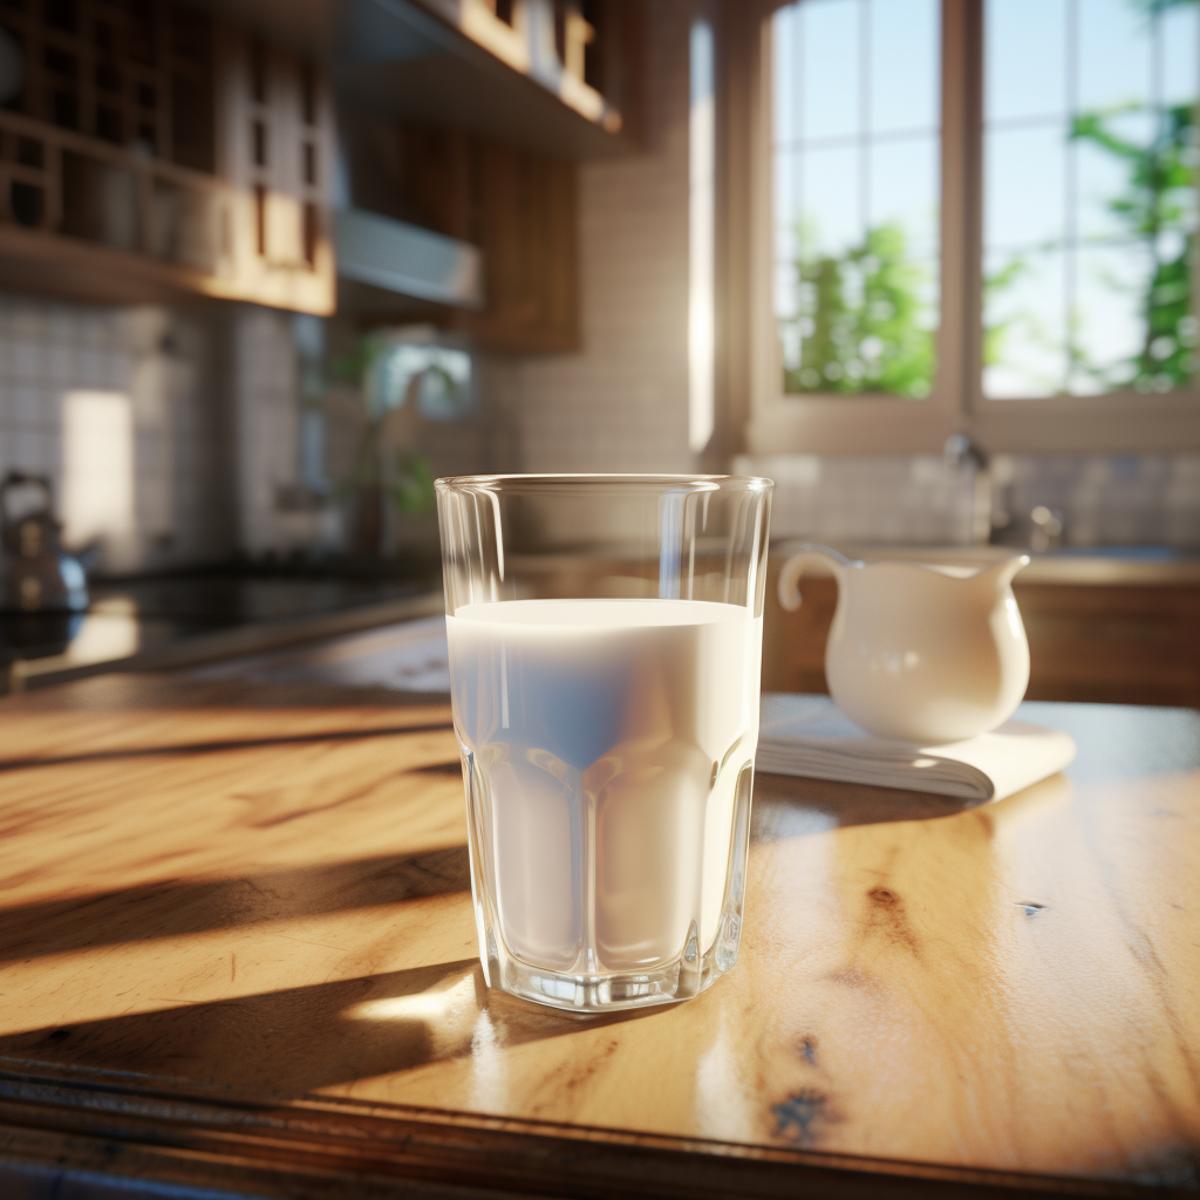 Milk on a kitchen counter